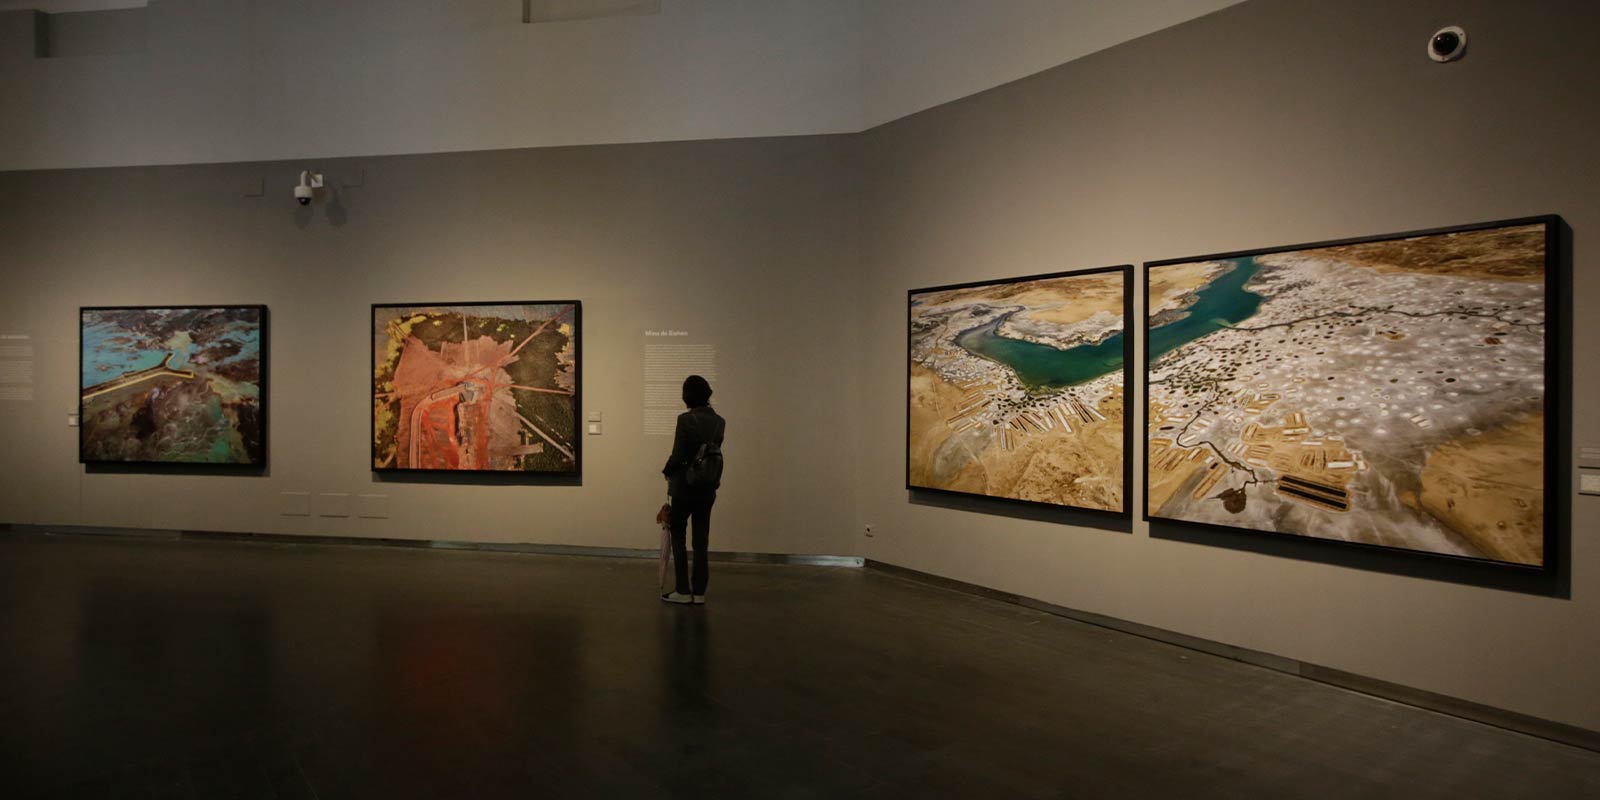 ACCIONA and PHotoESPAÑA inaugurate Edward Burtynsky exhibition in